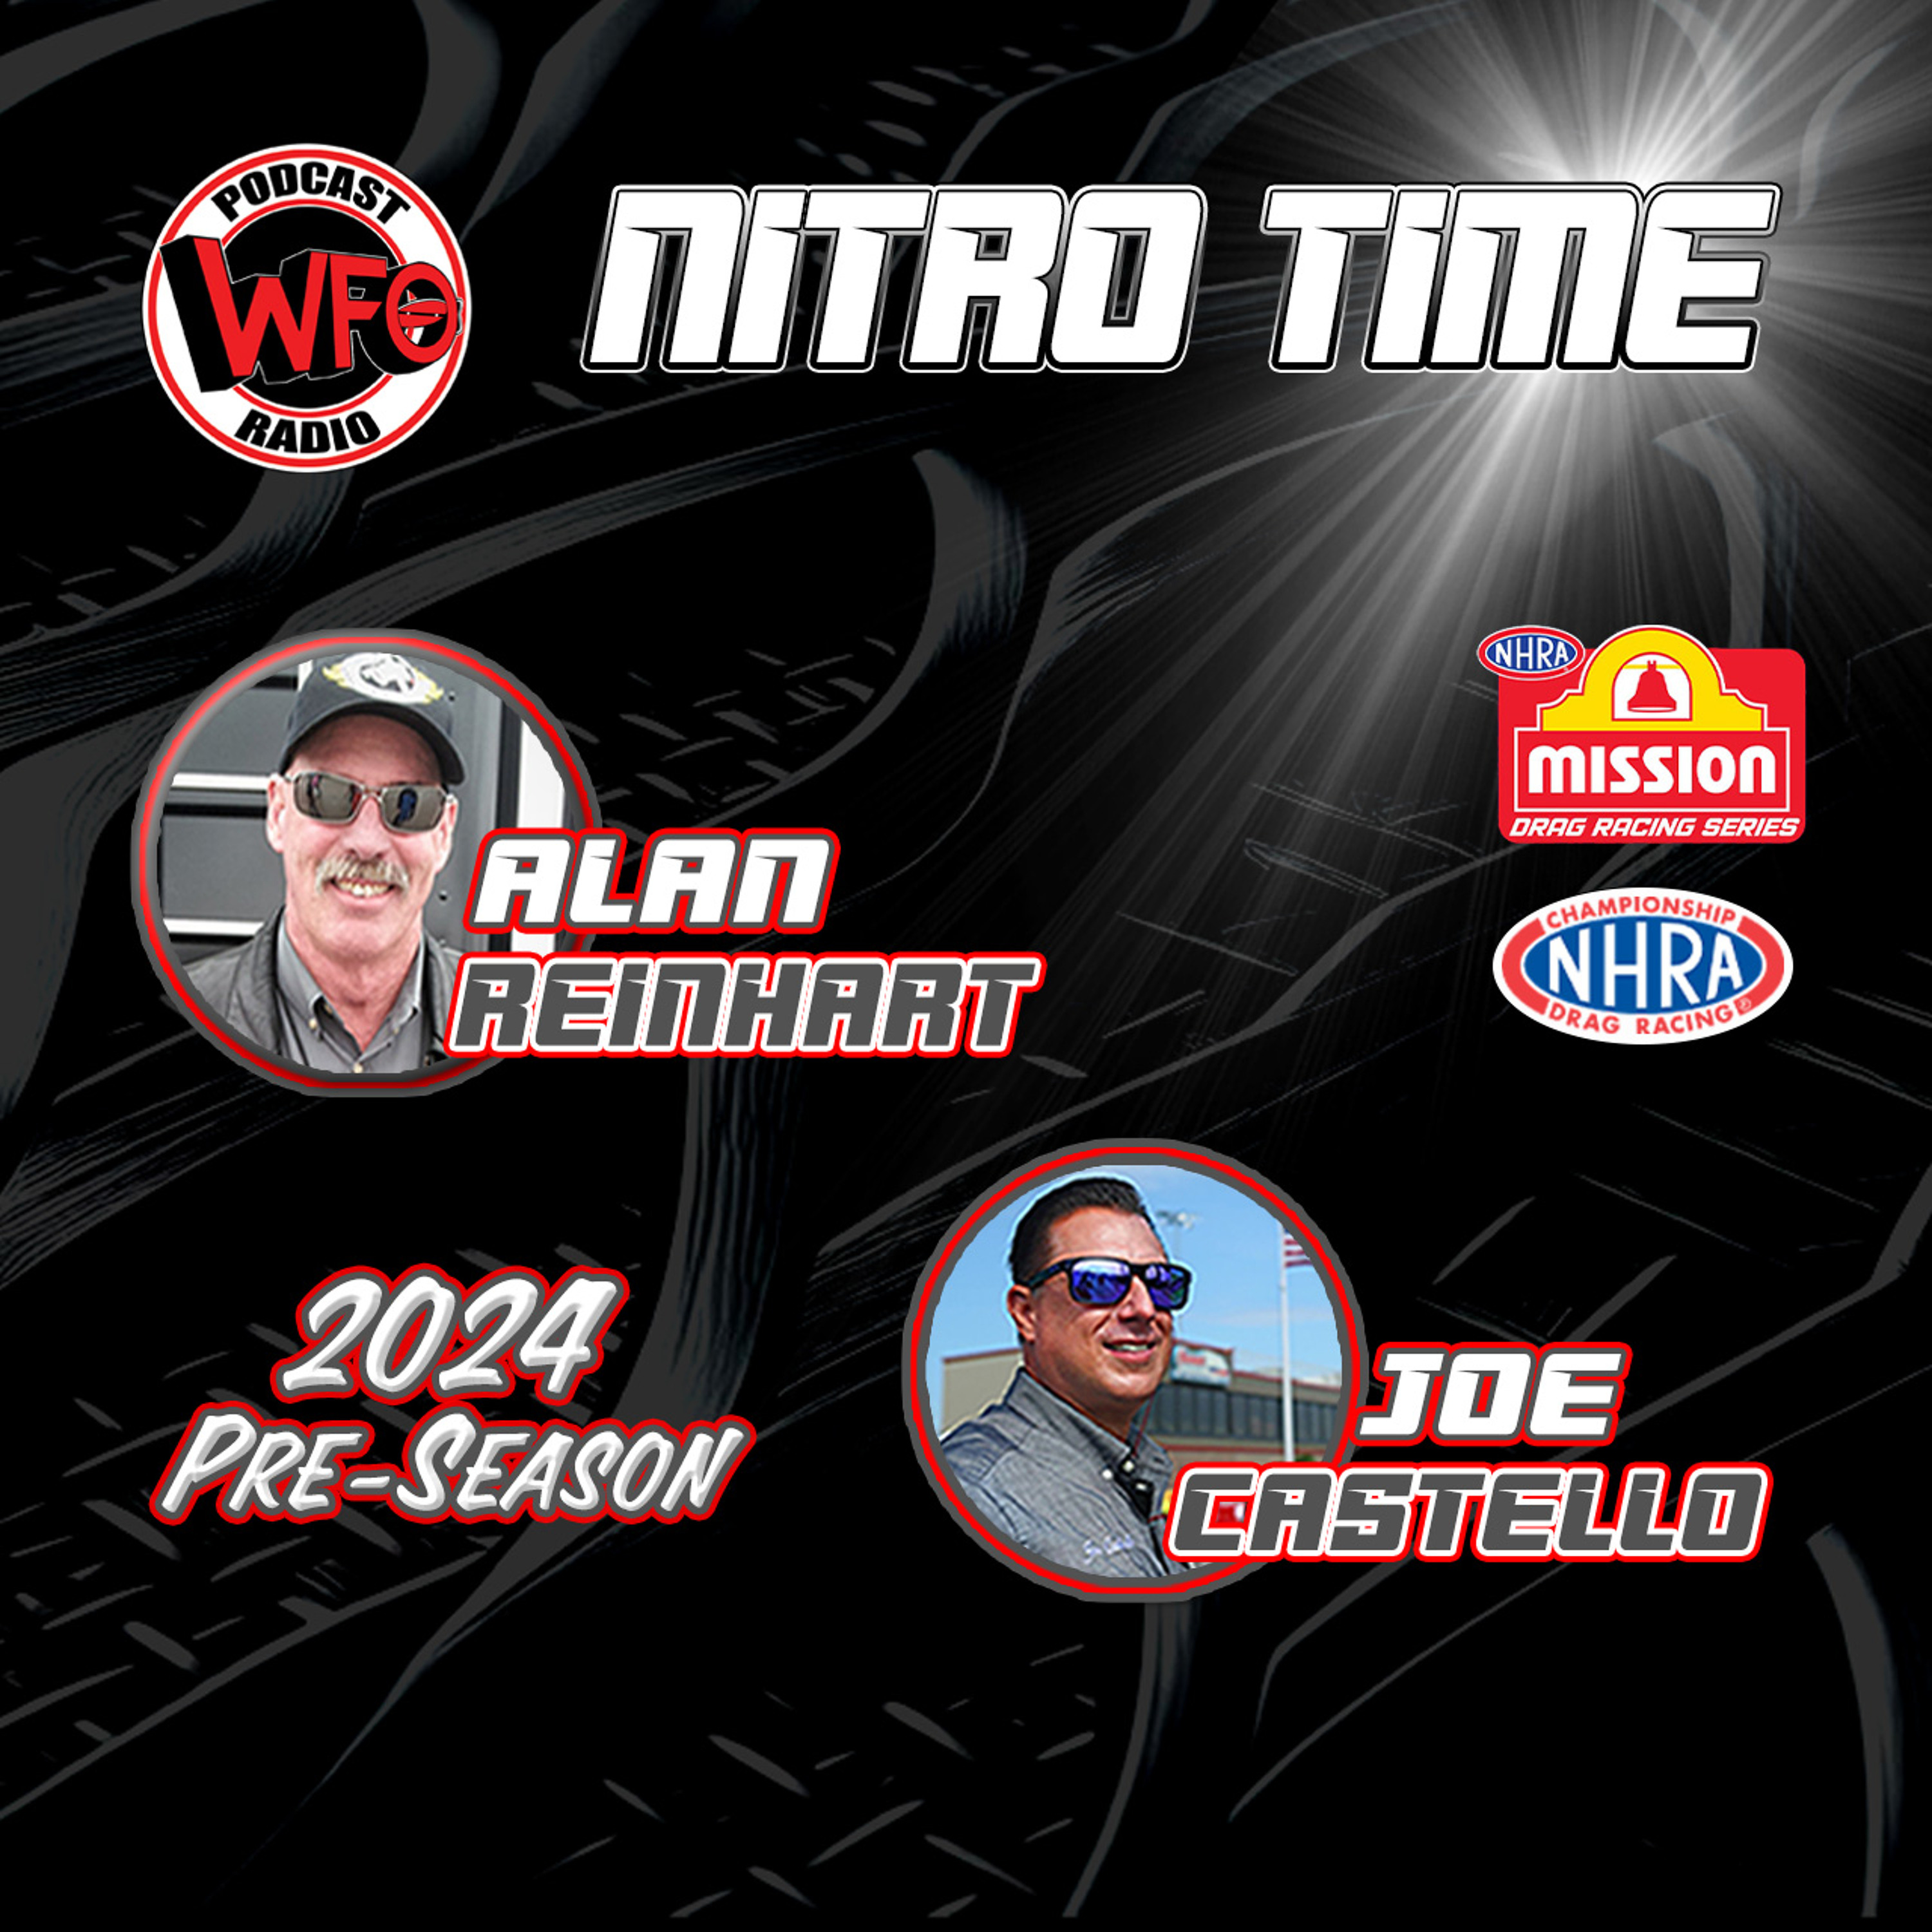 Nitro Time! Joe Castello and Alan Reinhart talk NHRA Drag Racing 2/6/2024